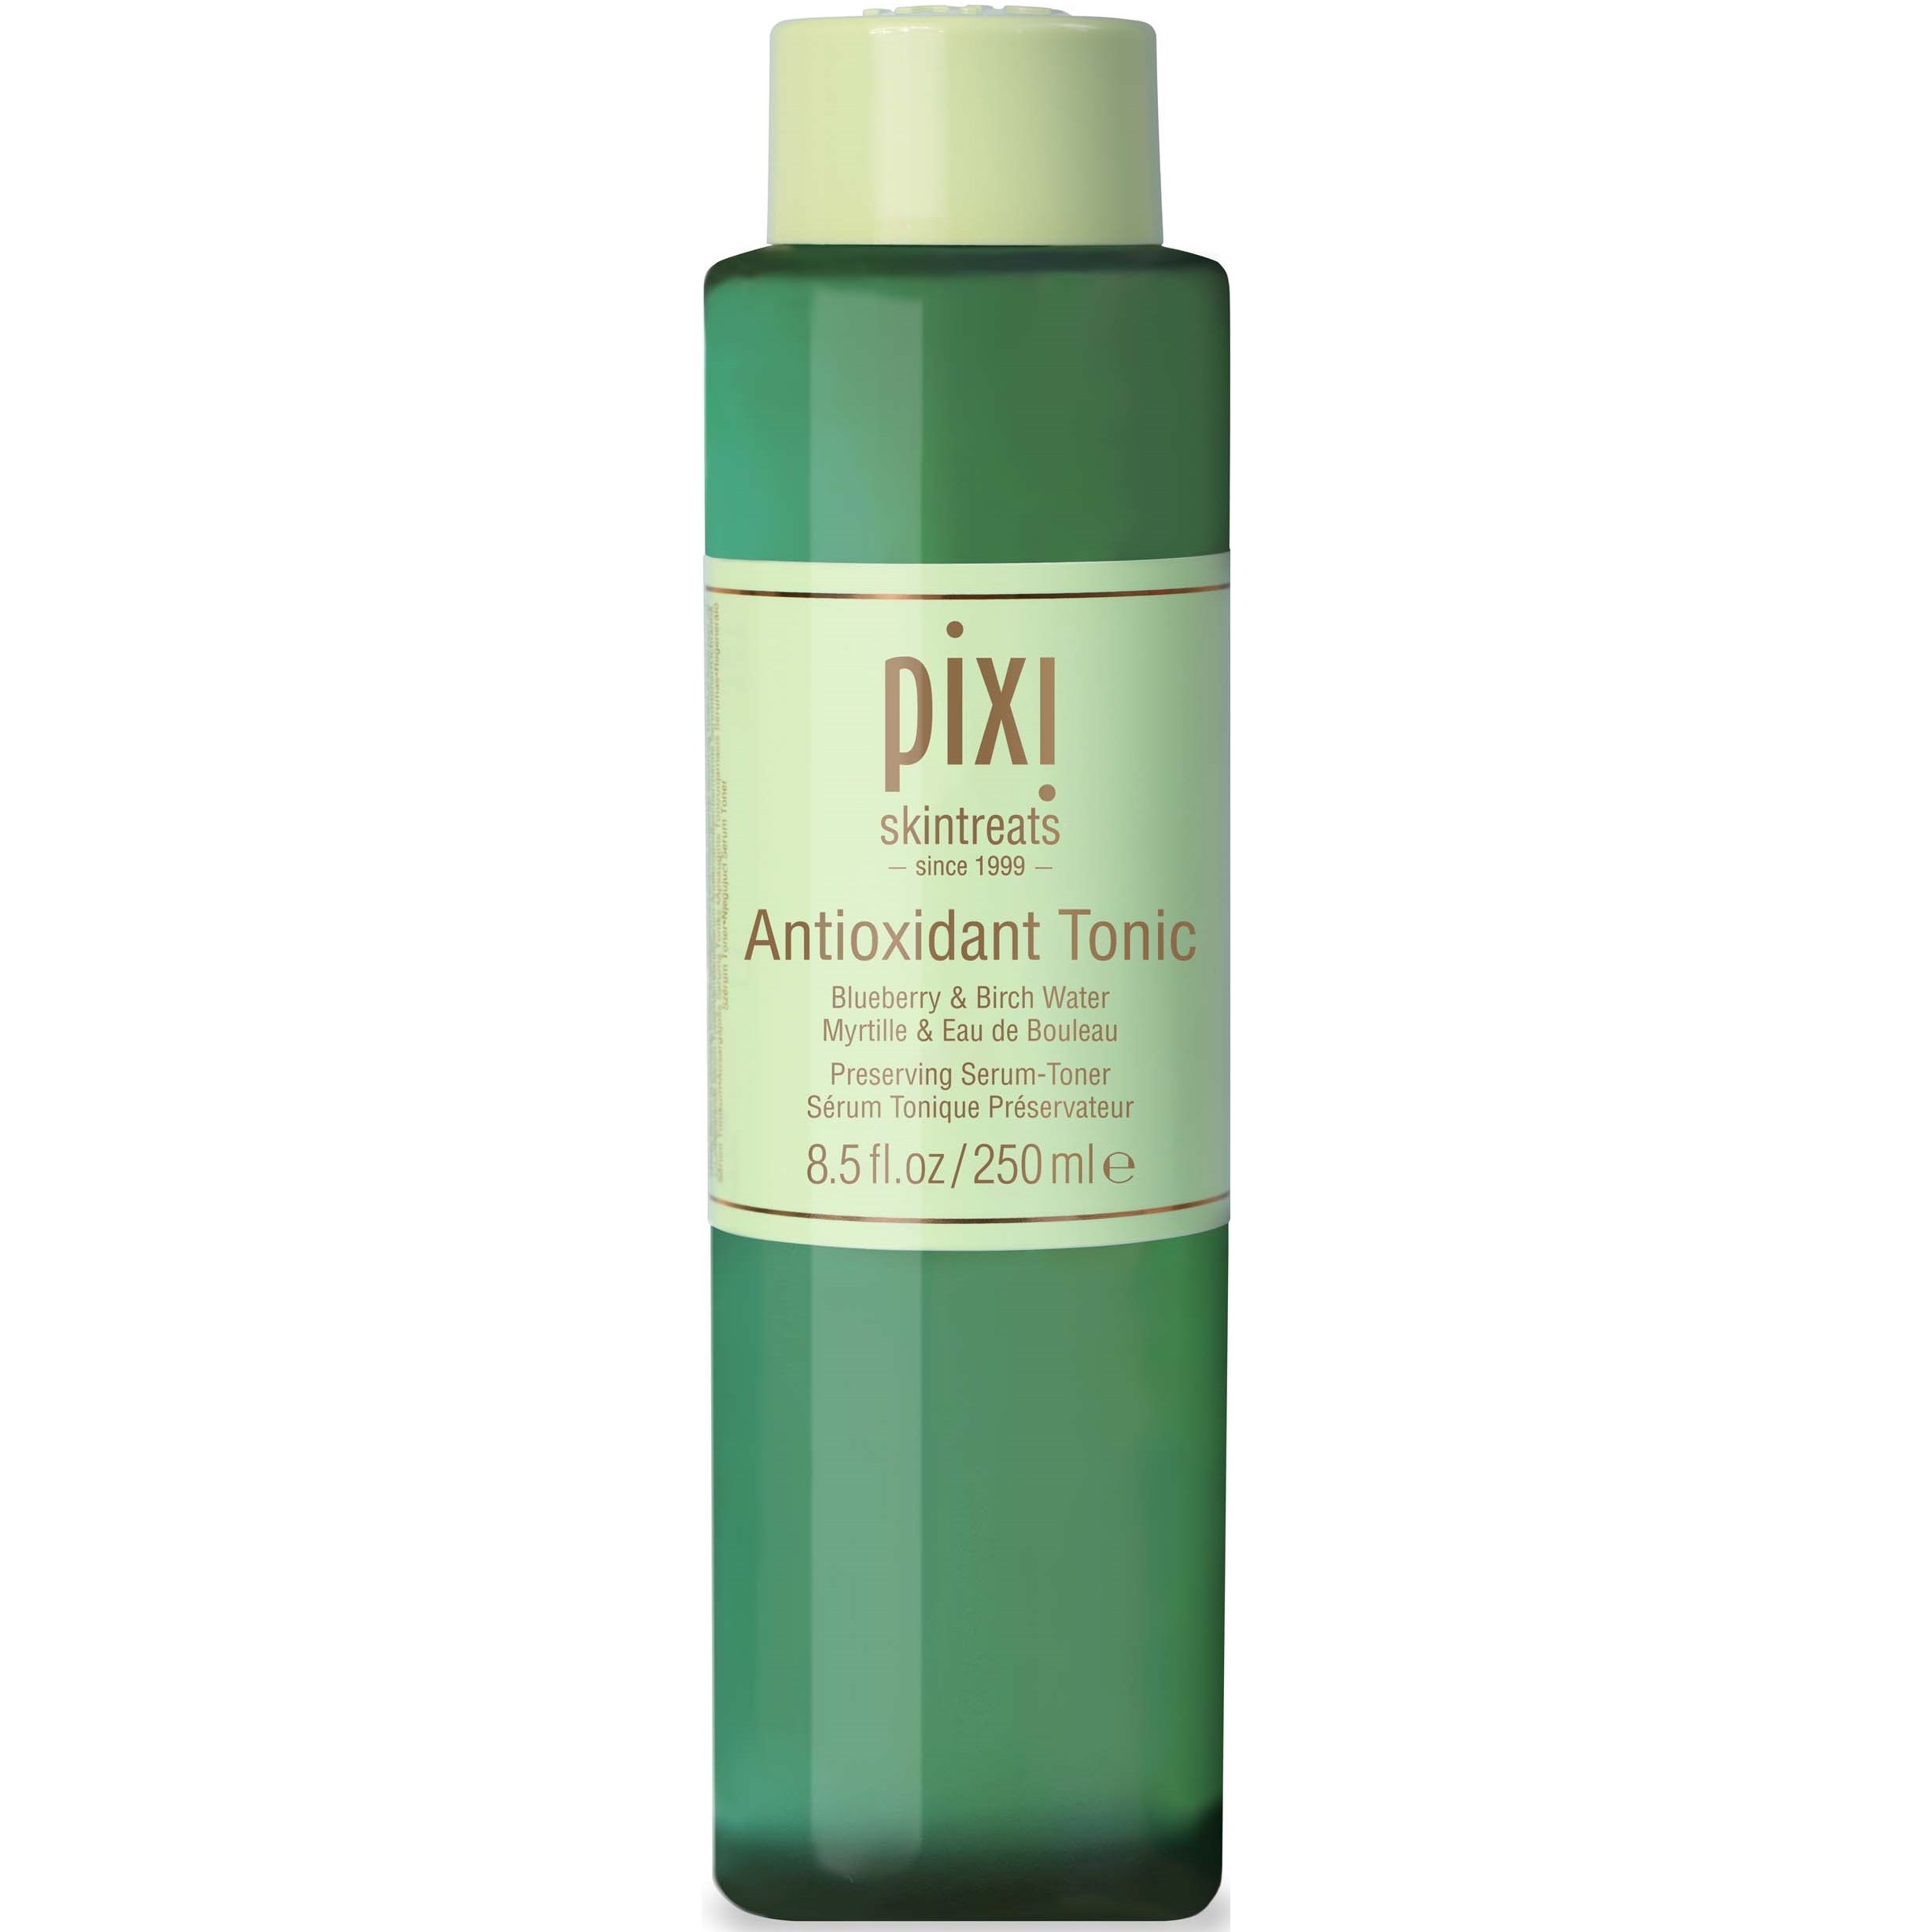 PIXI Antioxidant Tonic 250 ml